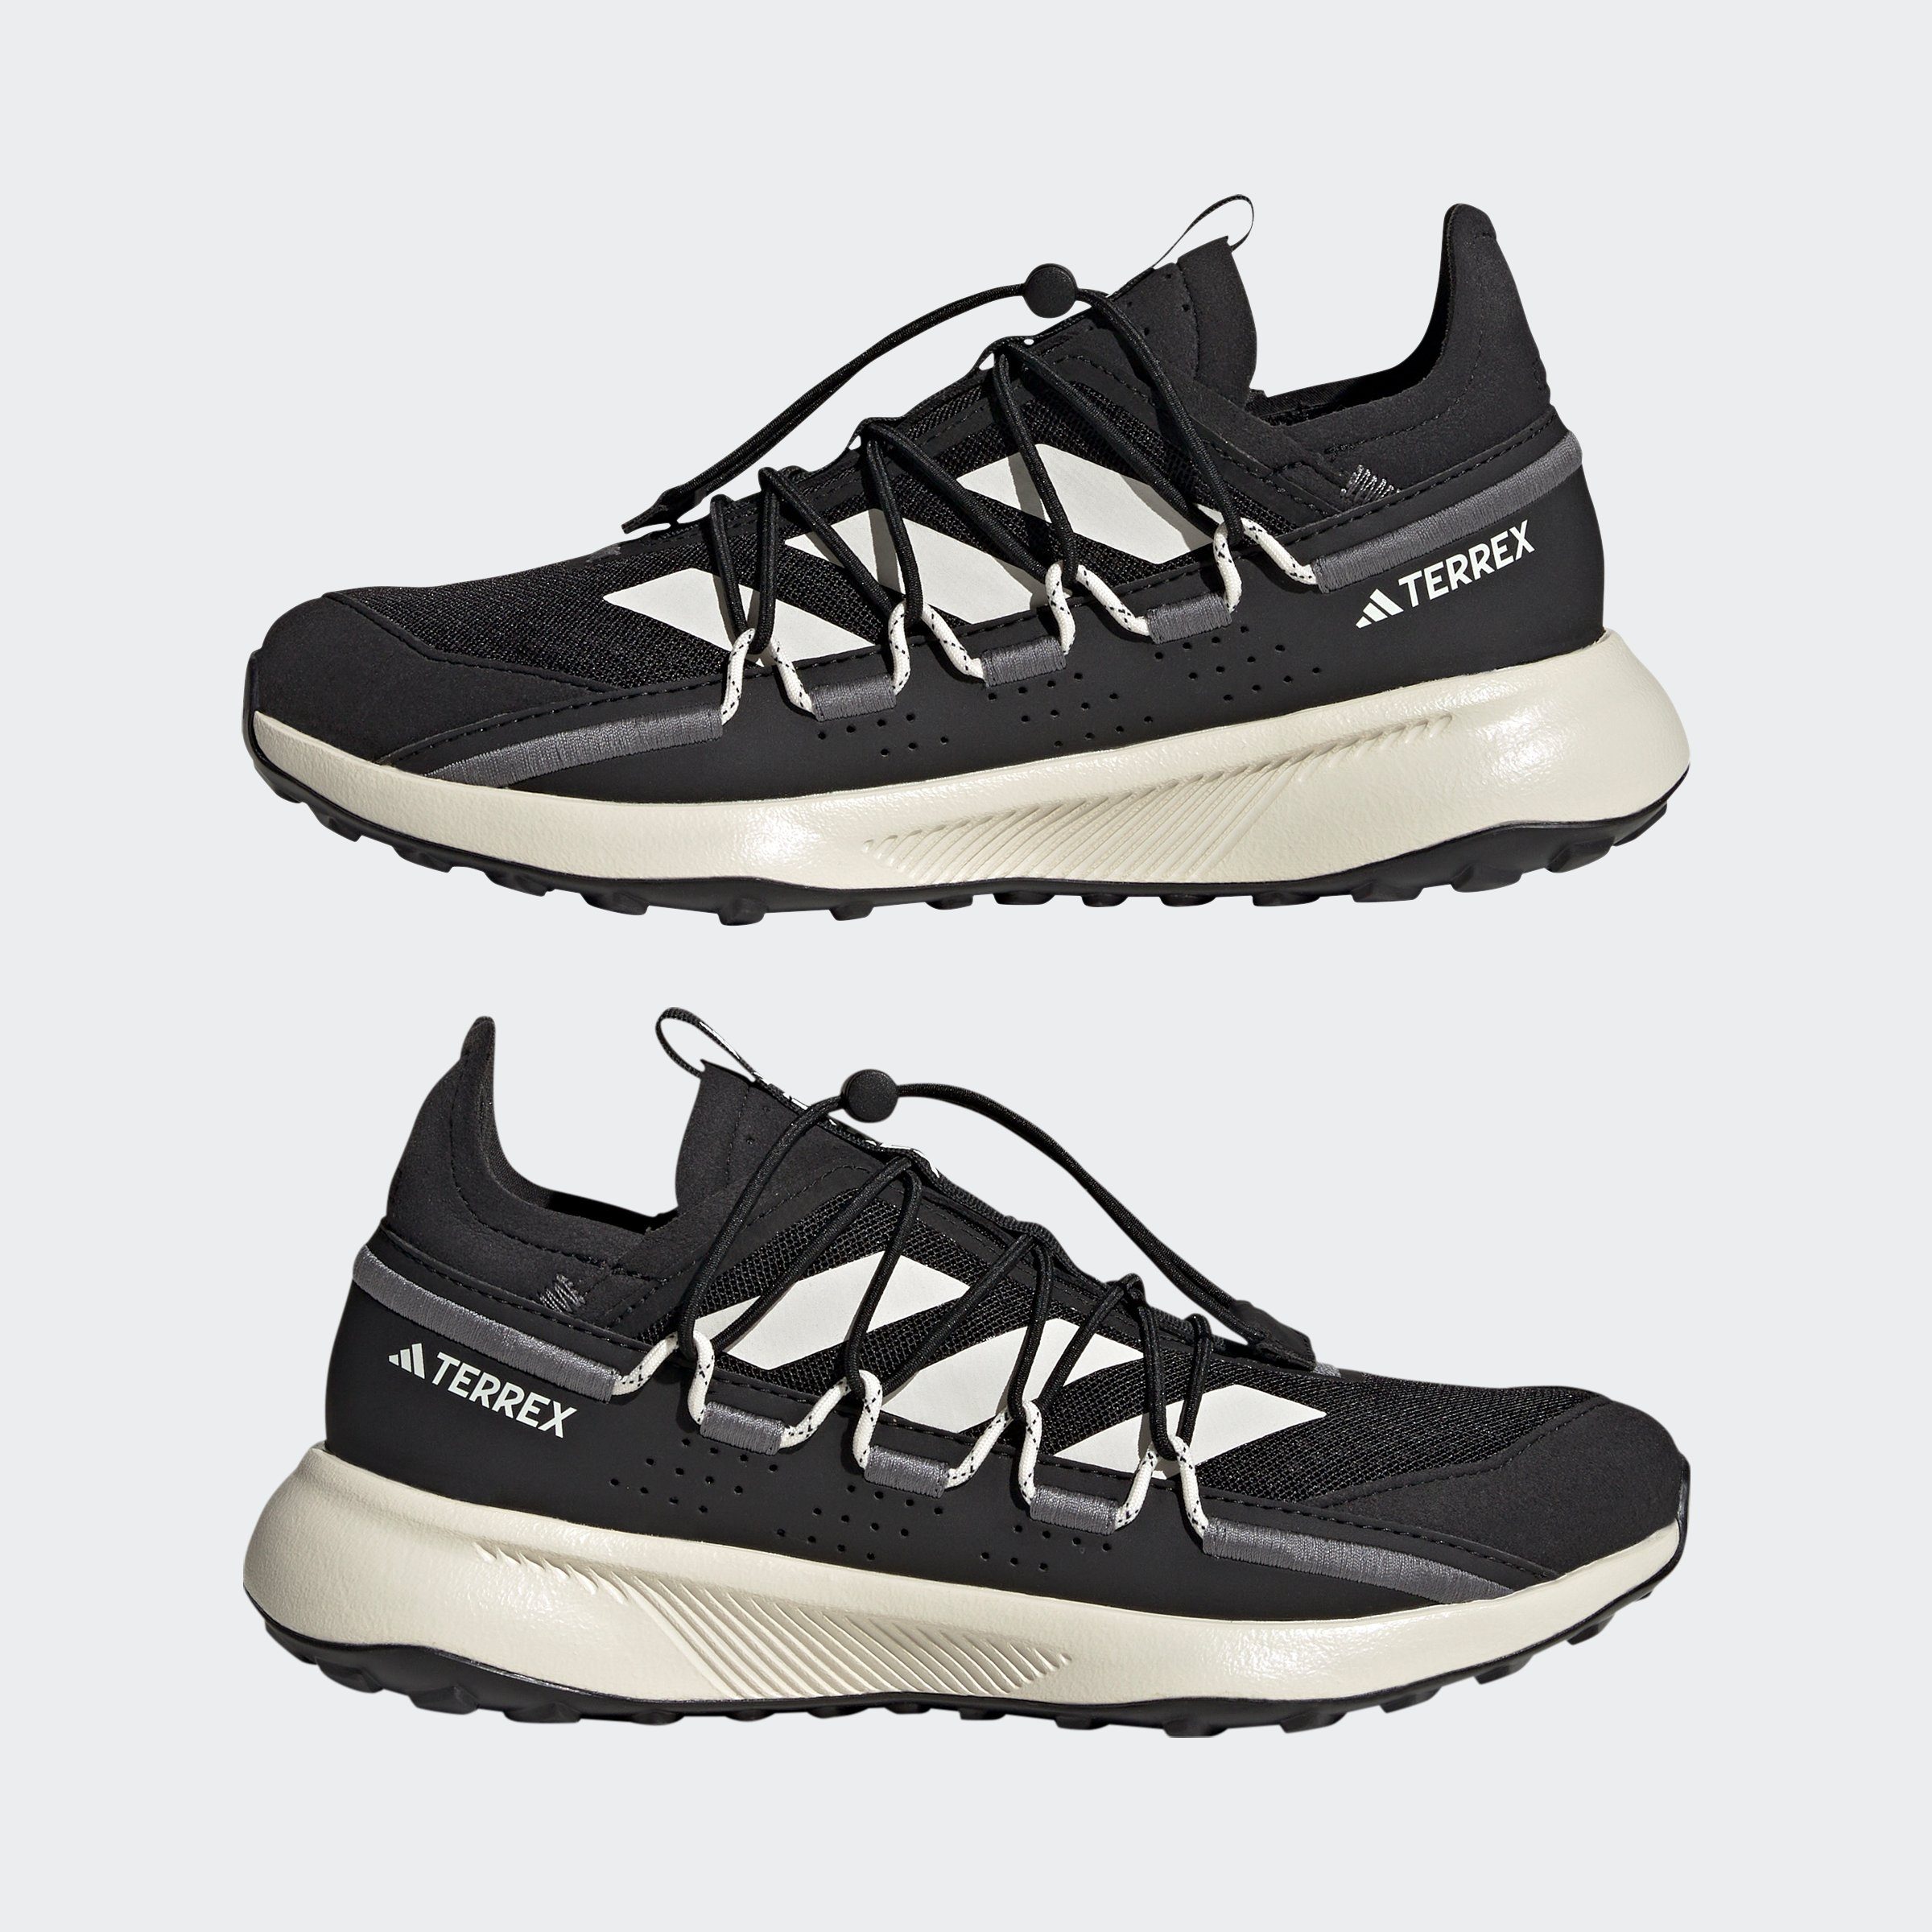 adidas Grey VOYAGER Wanderschuh / White Black TRAVEL 21 / Chalk TERREX Core Five